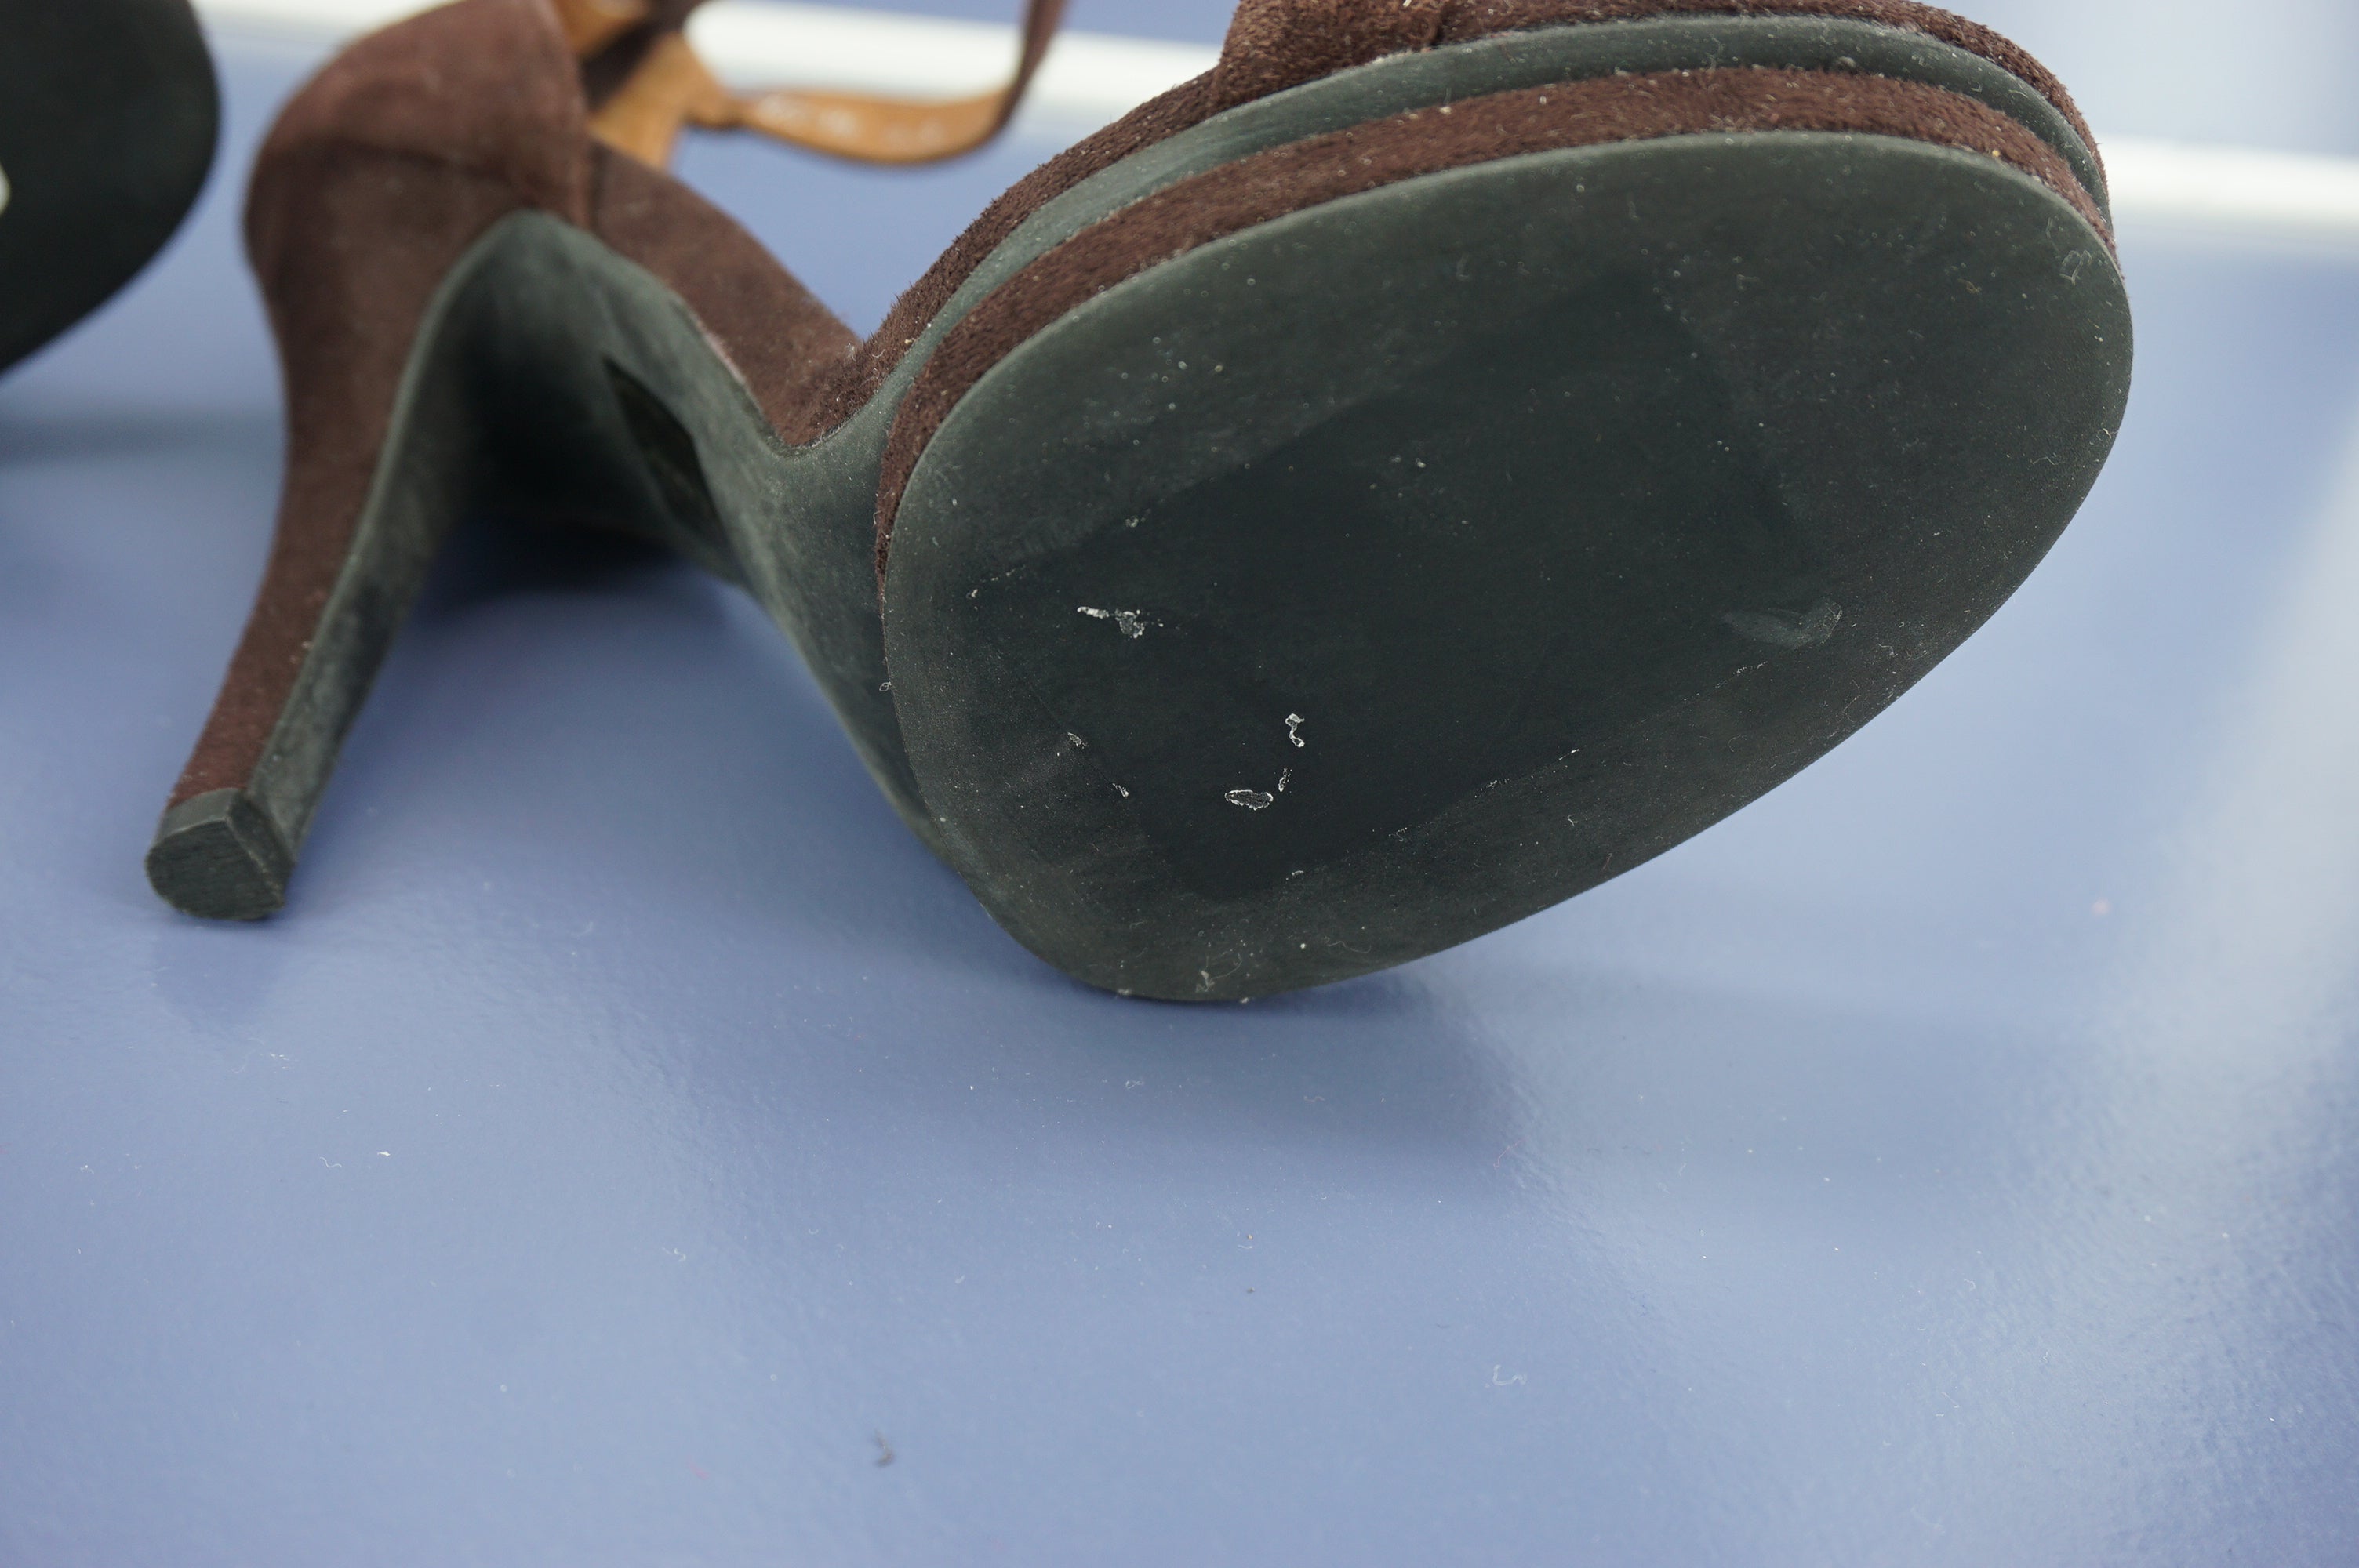 Jeffrey Campbell Burke Brown Suede platform Ankle strap Sandals size 6.5 New